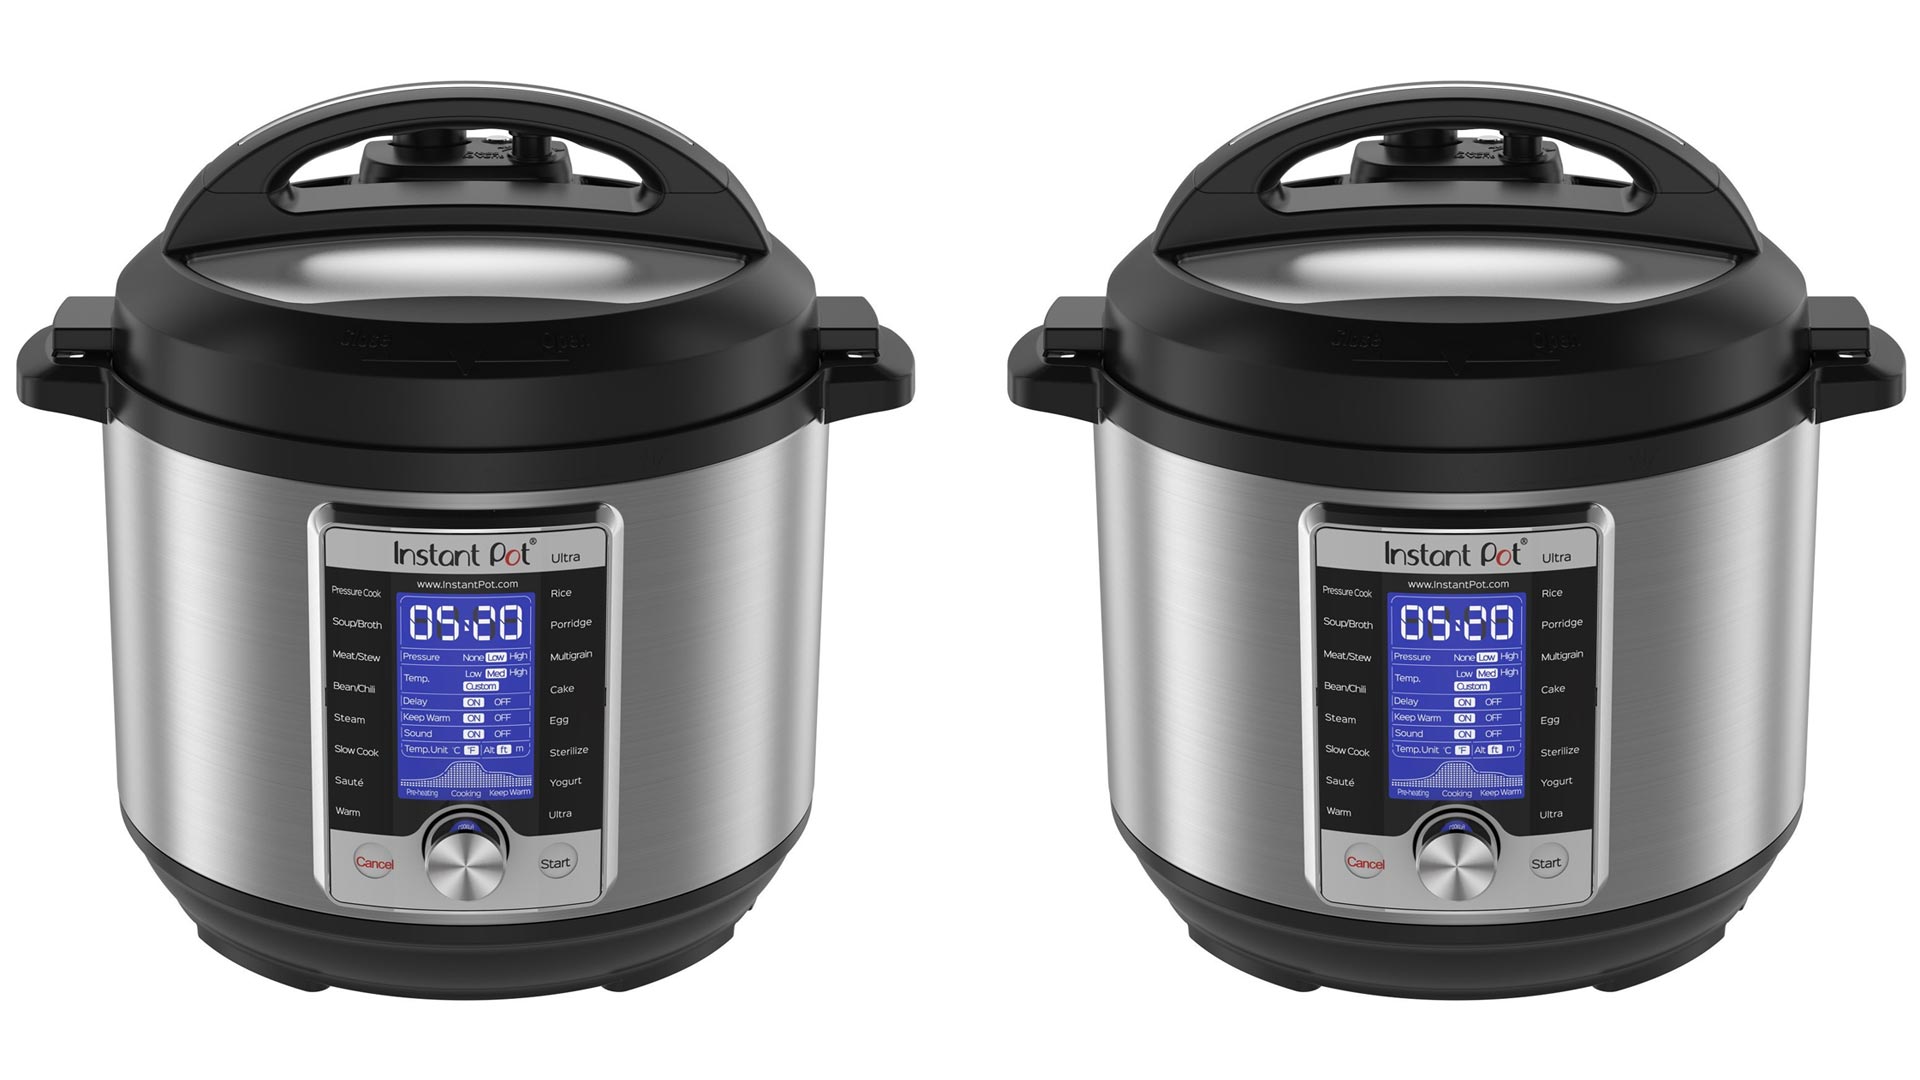 https://9to5toys.com/wp-content/uploads/sites/5/2018/04/instant-pot-ultra-6-qt-10-in-1-pressure-cooker.jpg